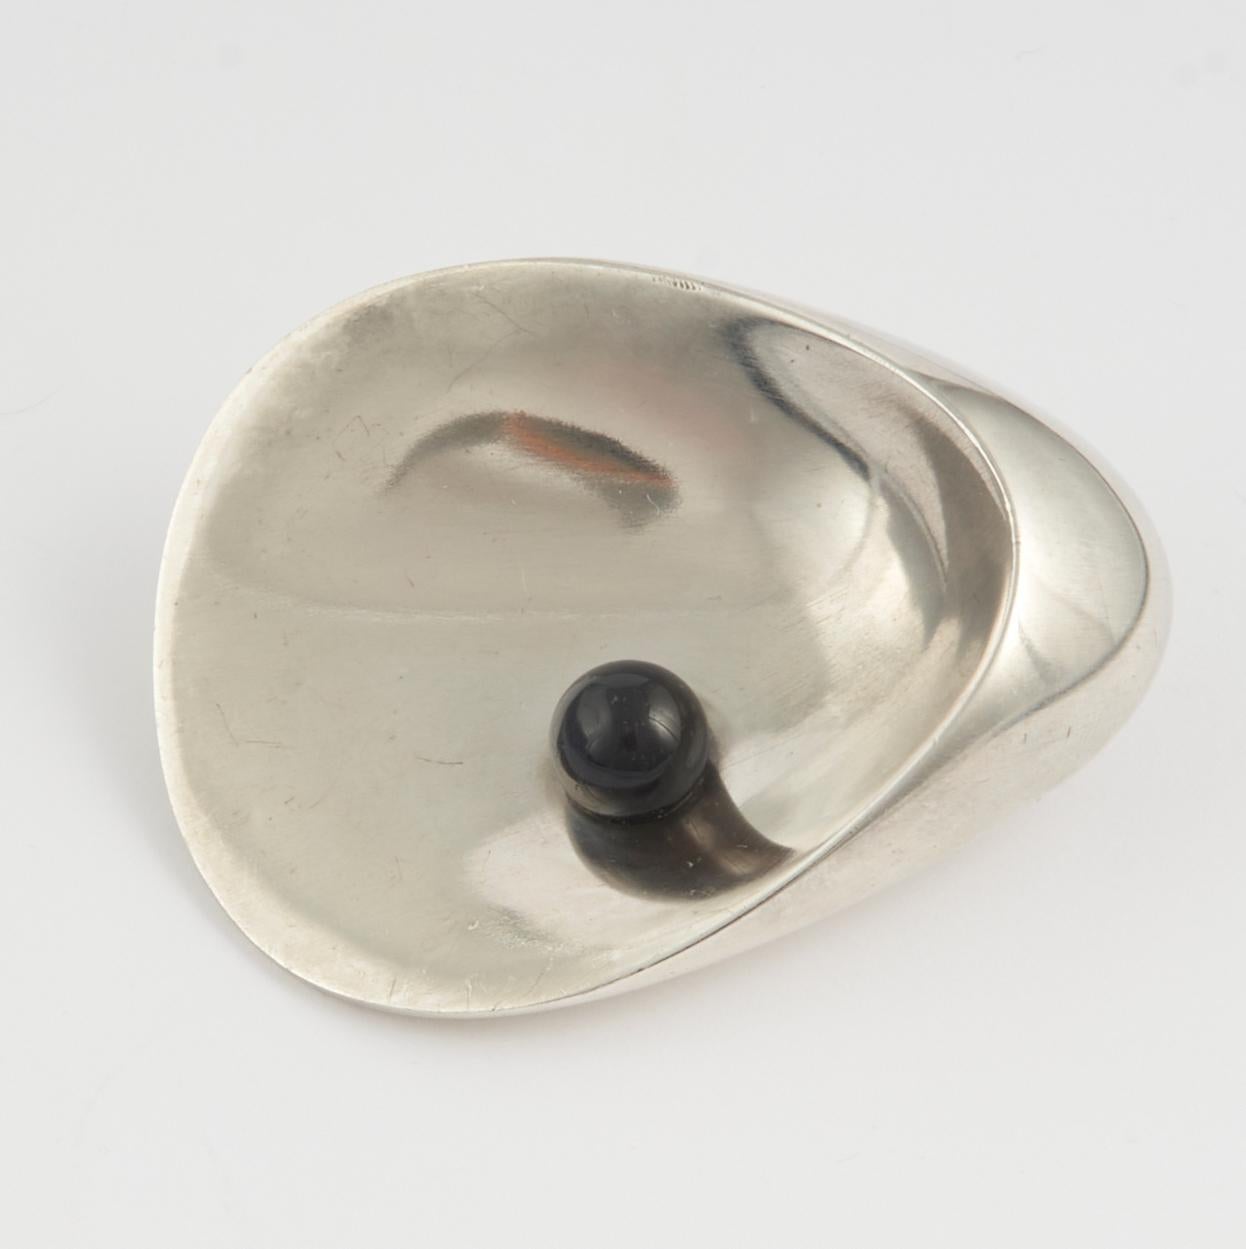 Georg Jensen Sterling Silver Shell Brooch with Onyx, Design #328 by Nanna Ditzel


Classis Nanna Ditzel 